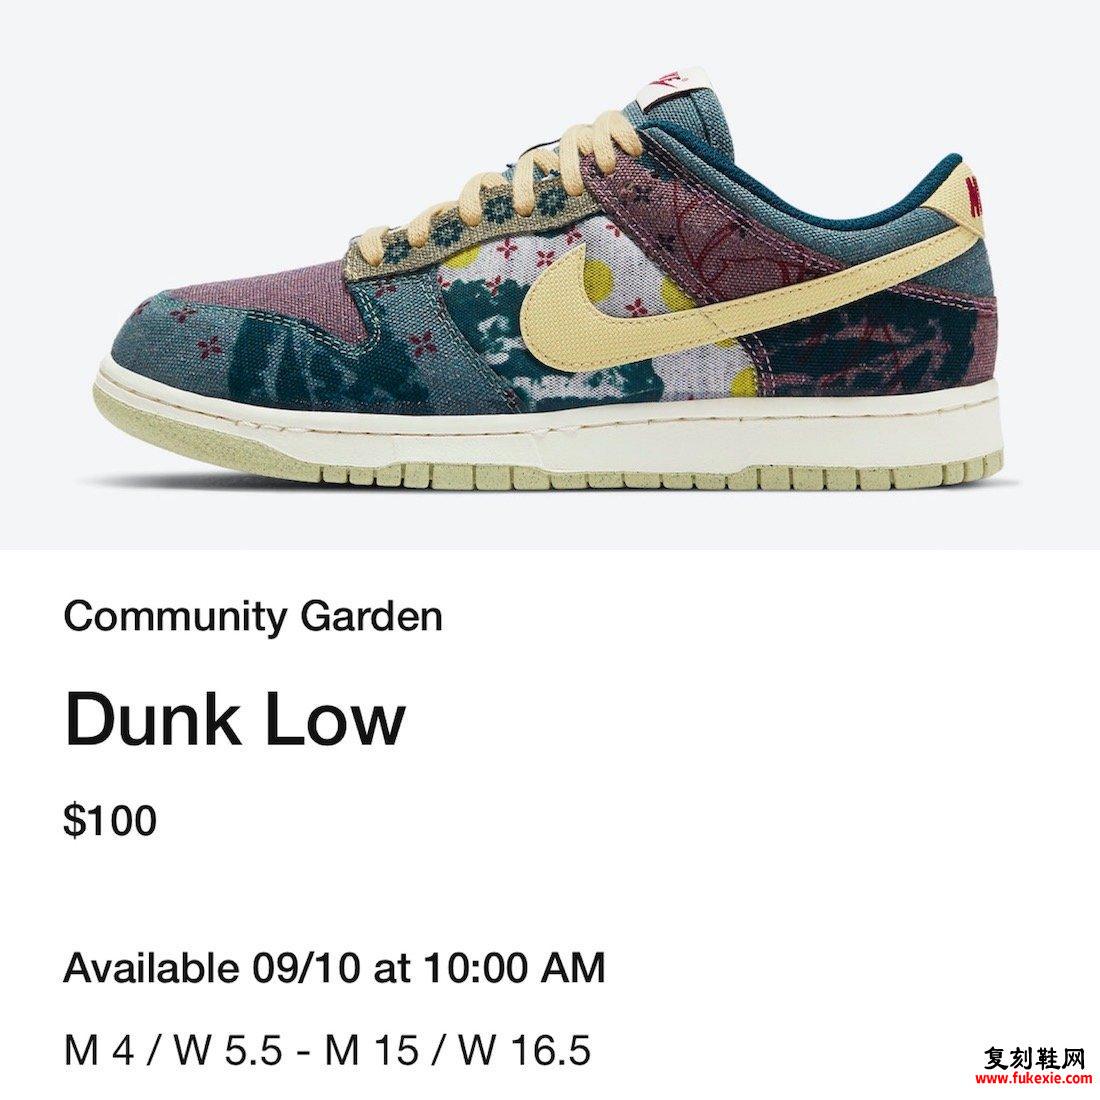 Nike Dunk Low社区花园CZ9747-900发售日期